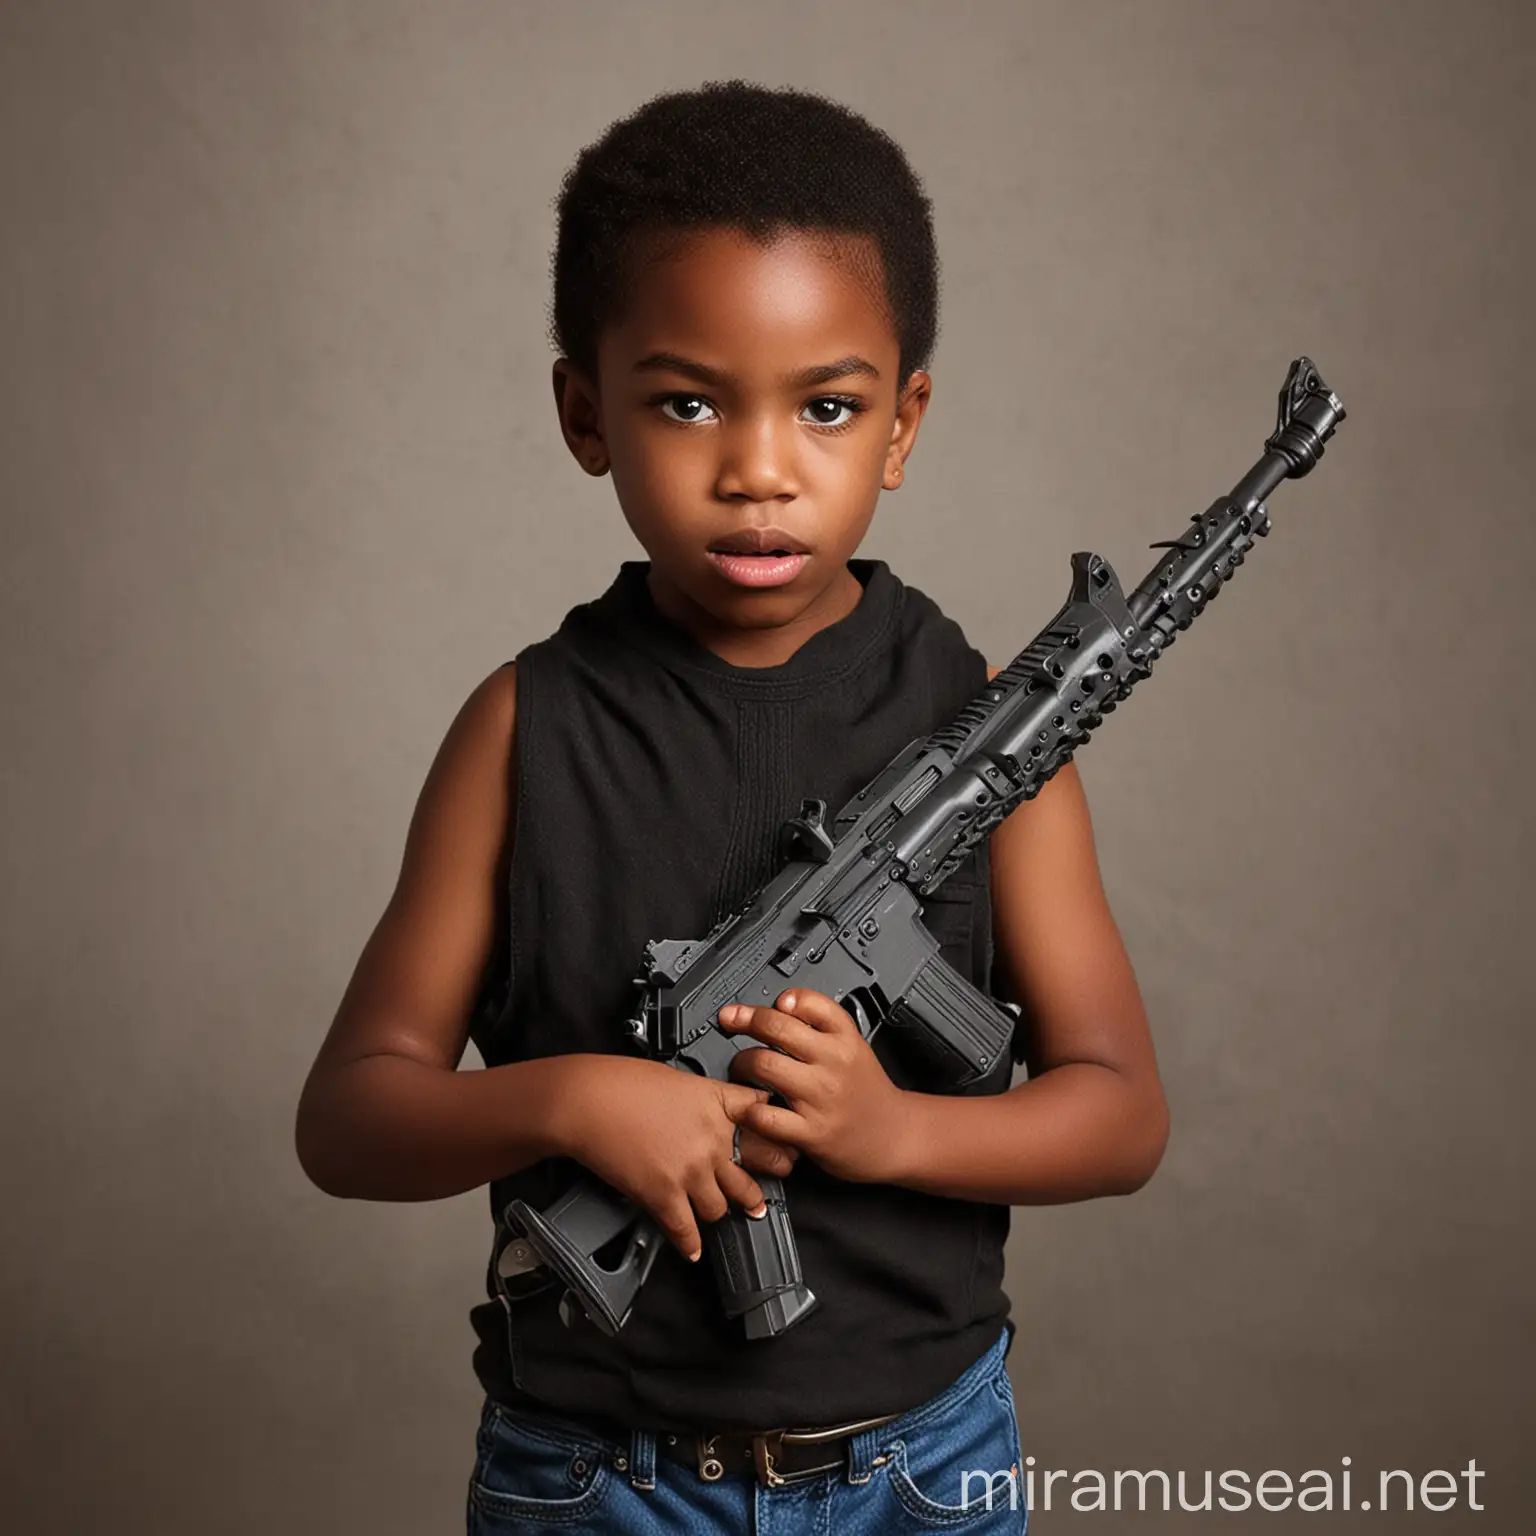 black kids with guns
